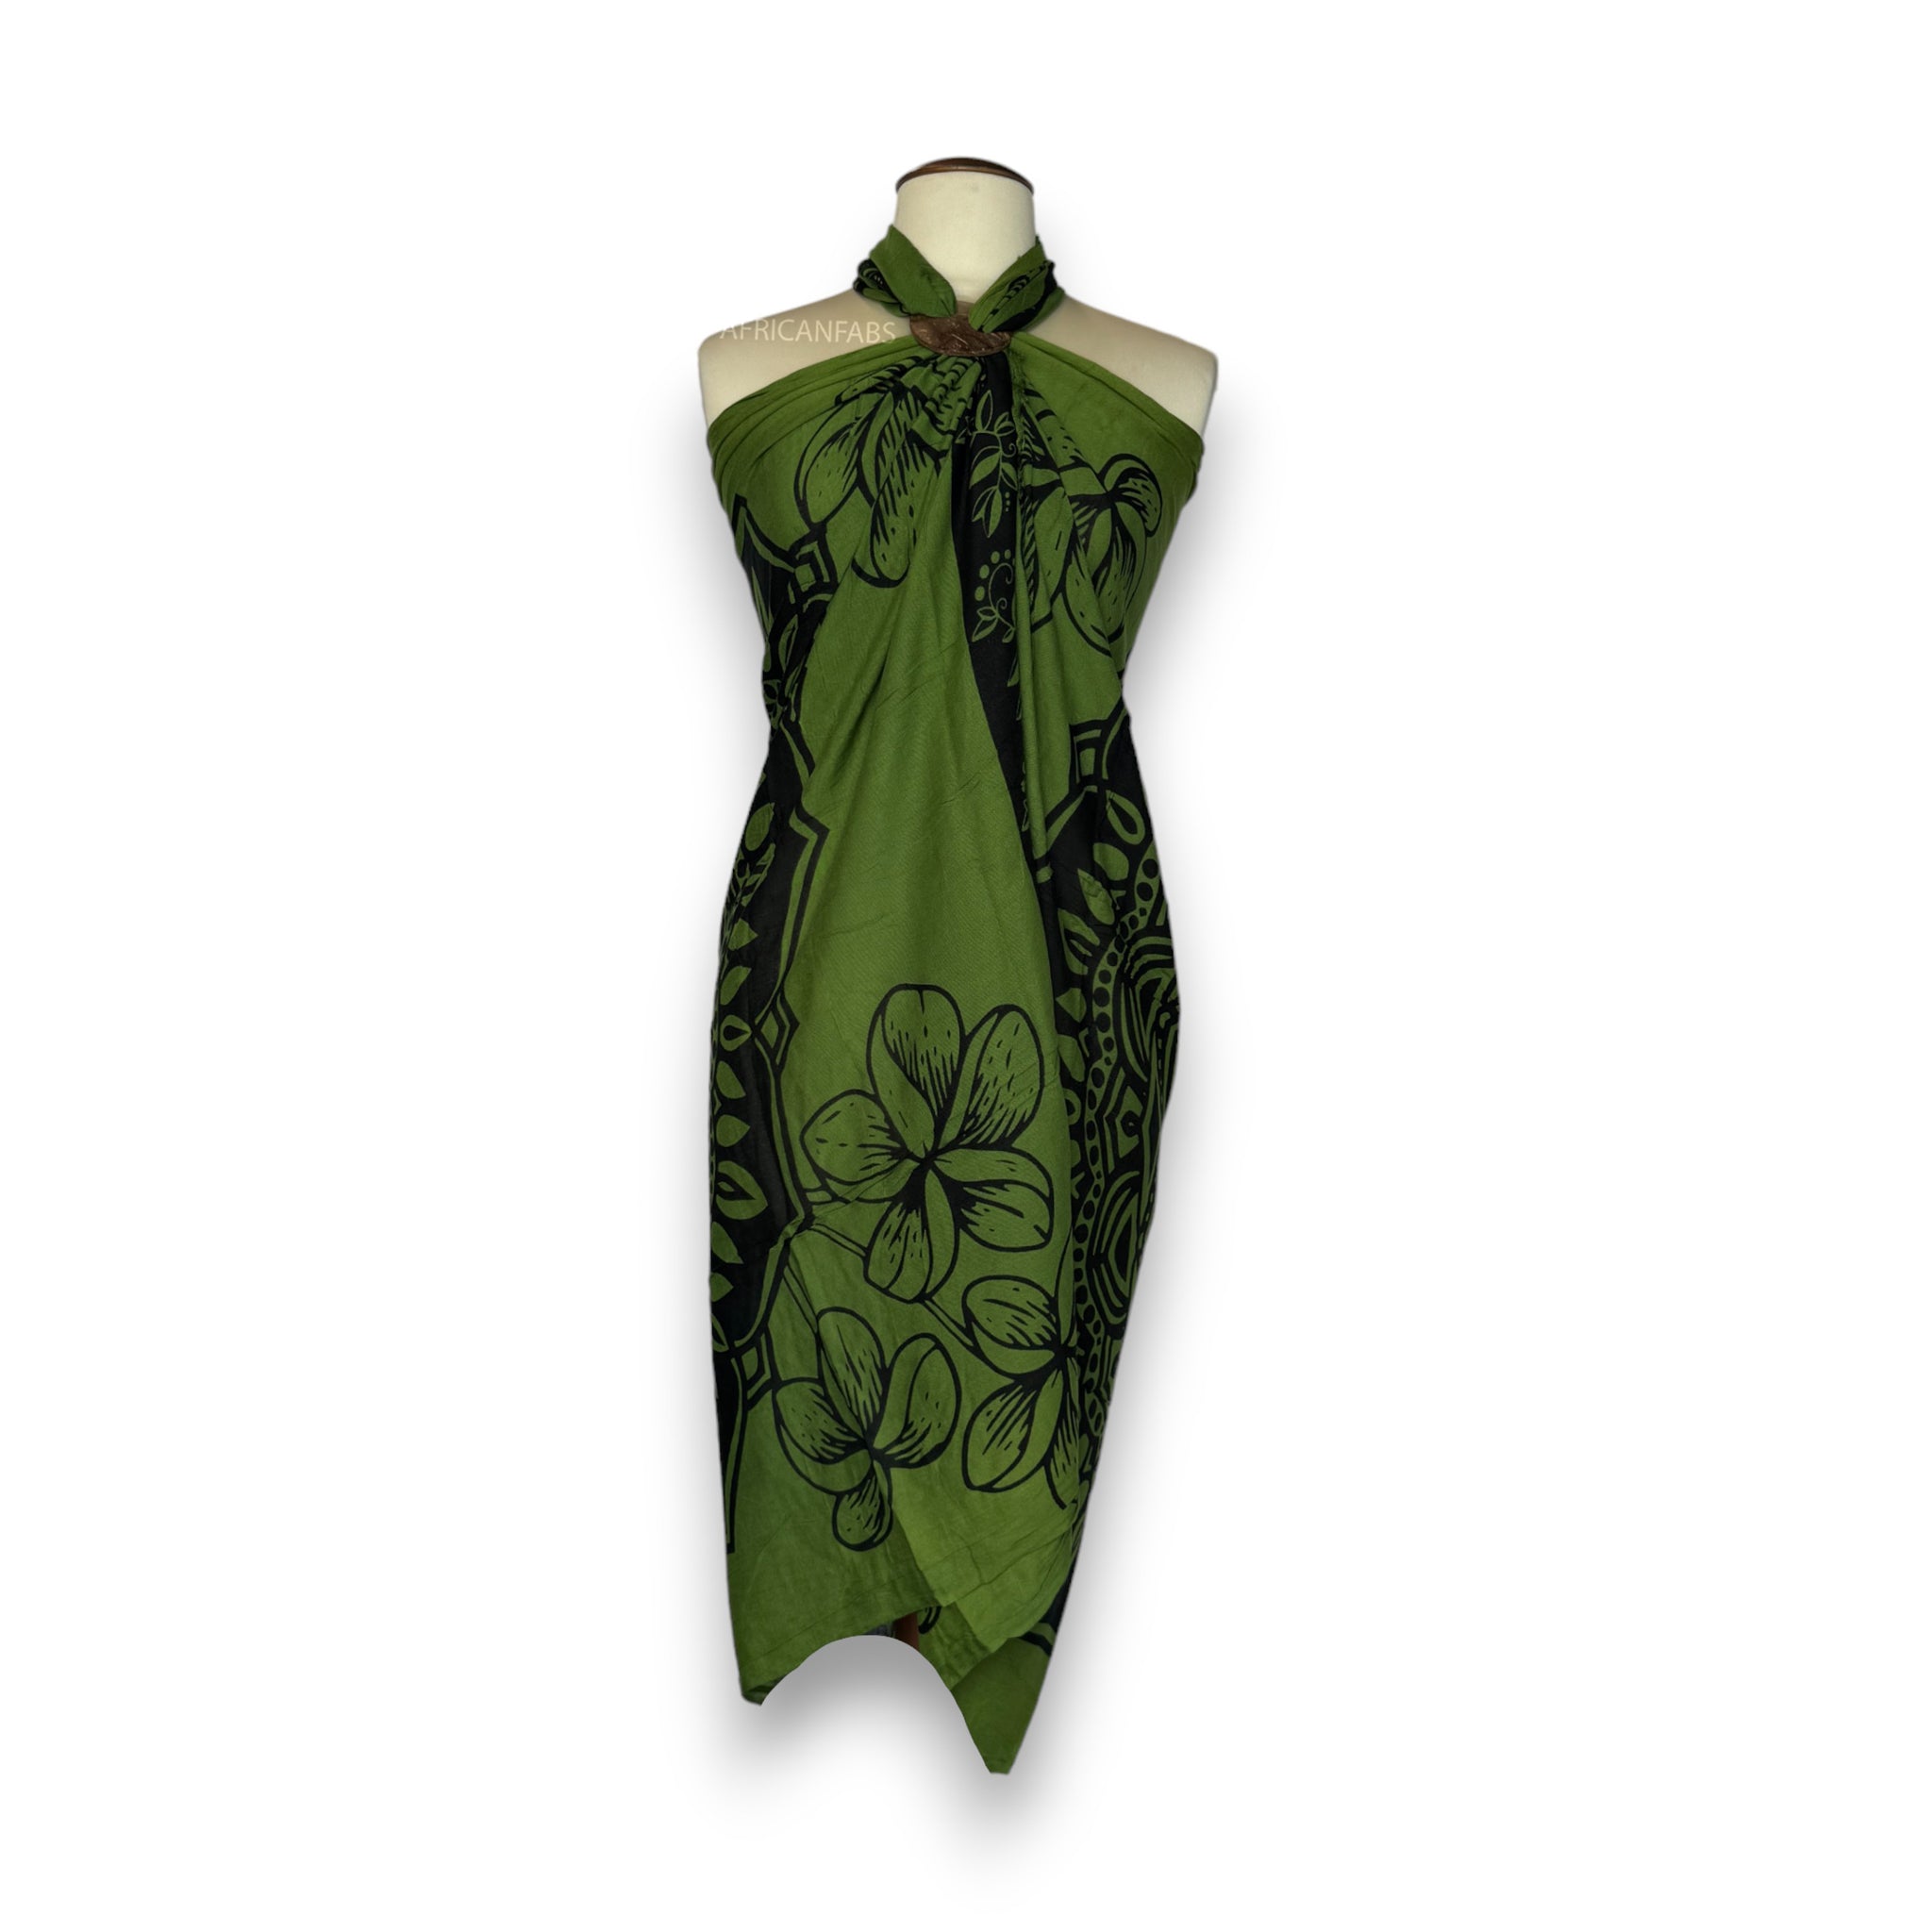 Sarong / pareo - Beachwear wrap skirt - Green / black Mandala